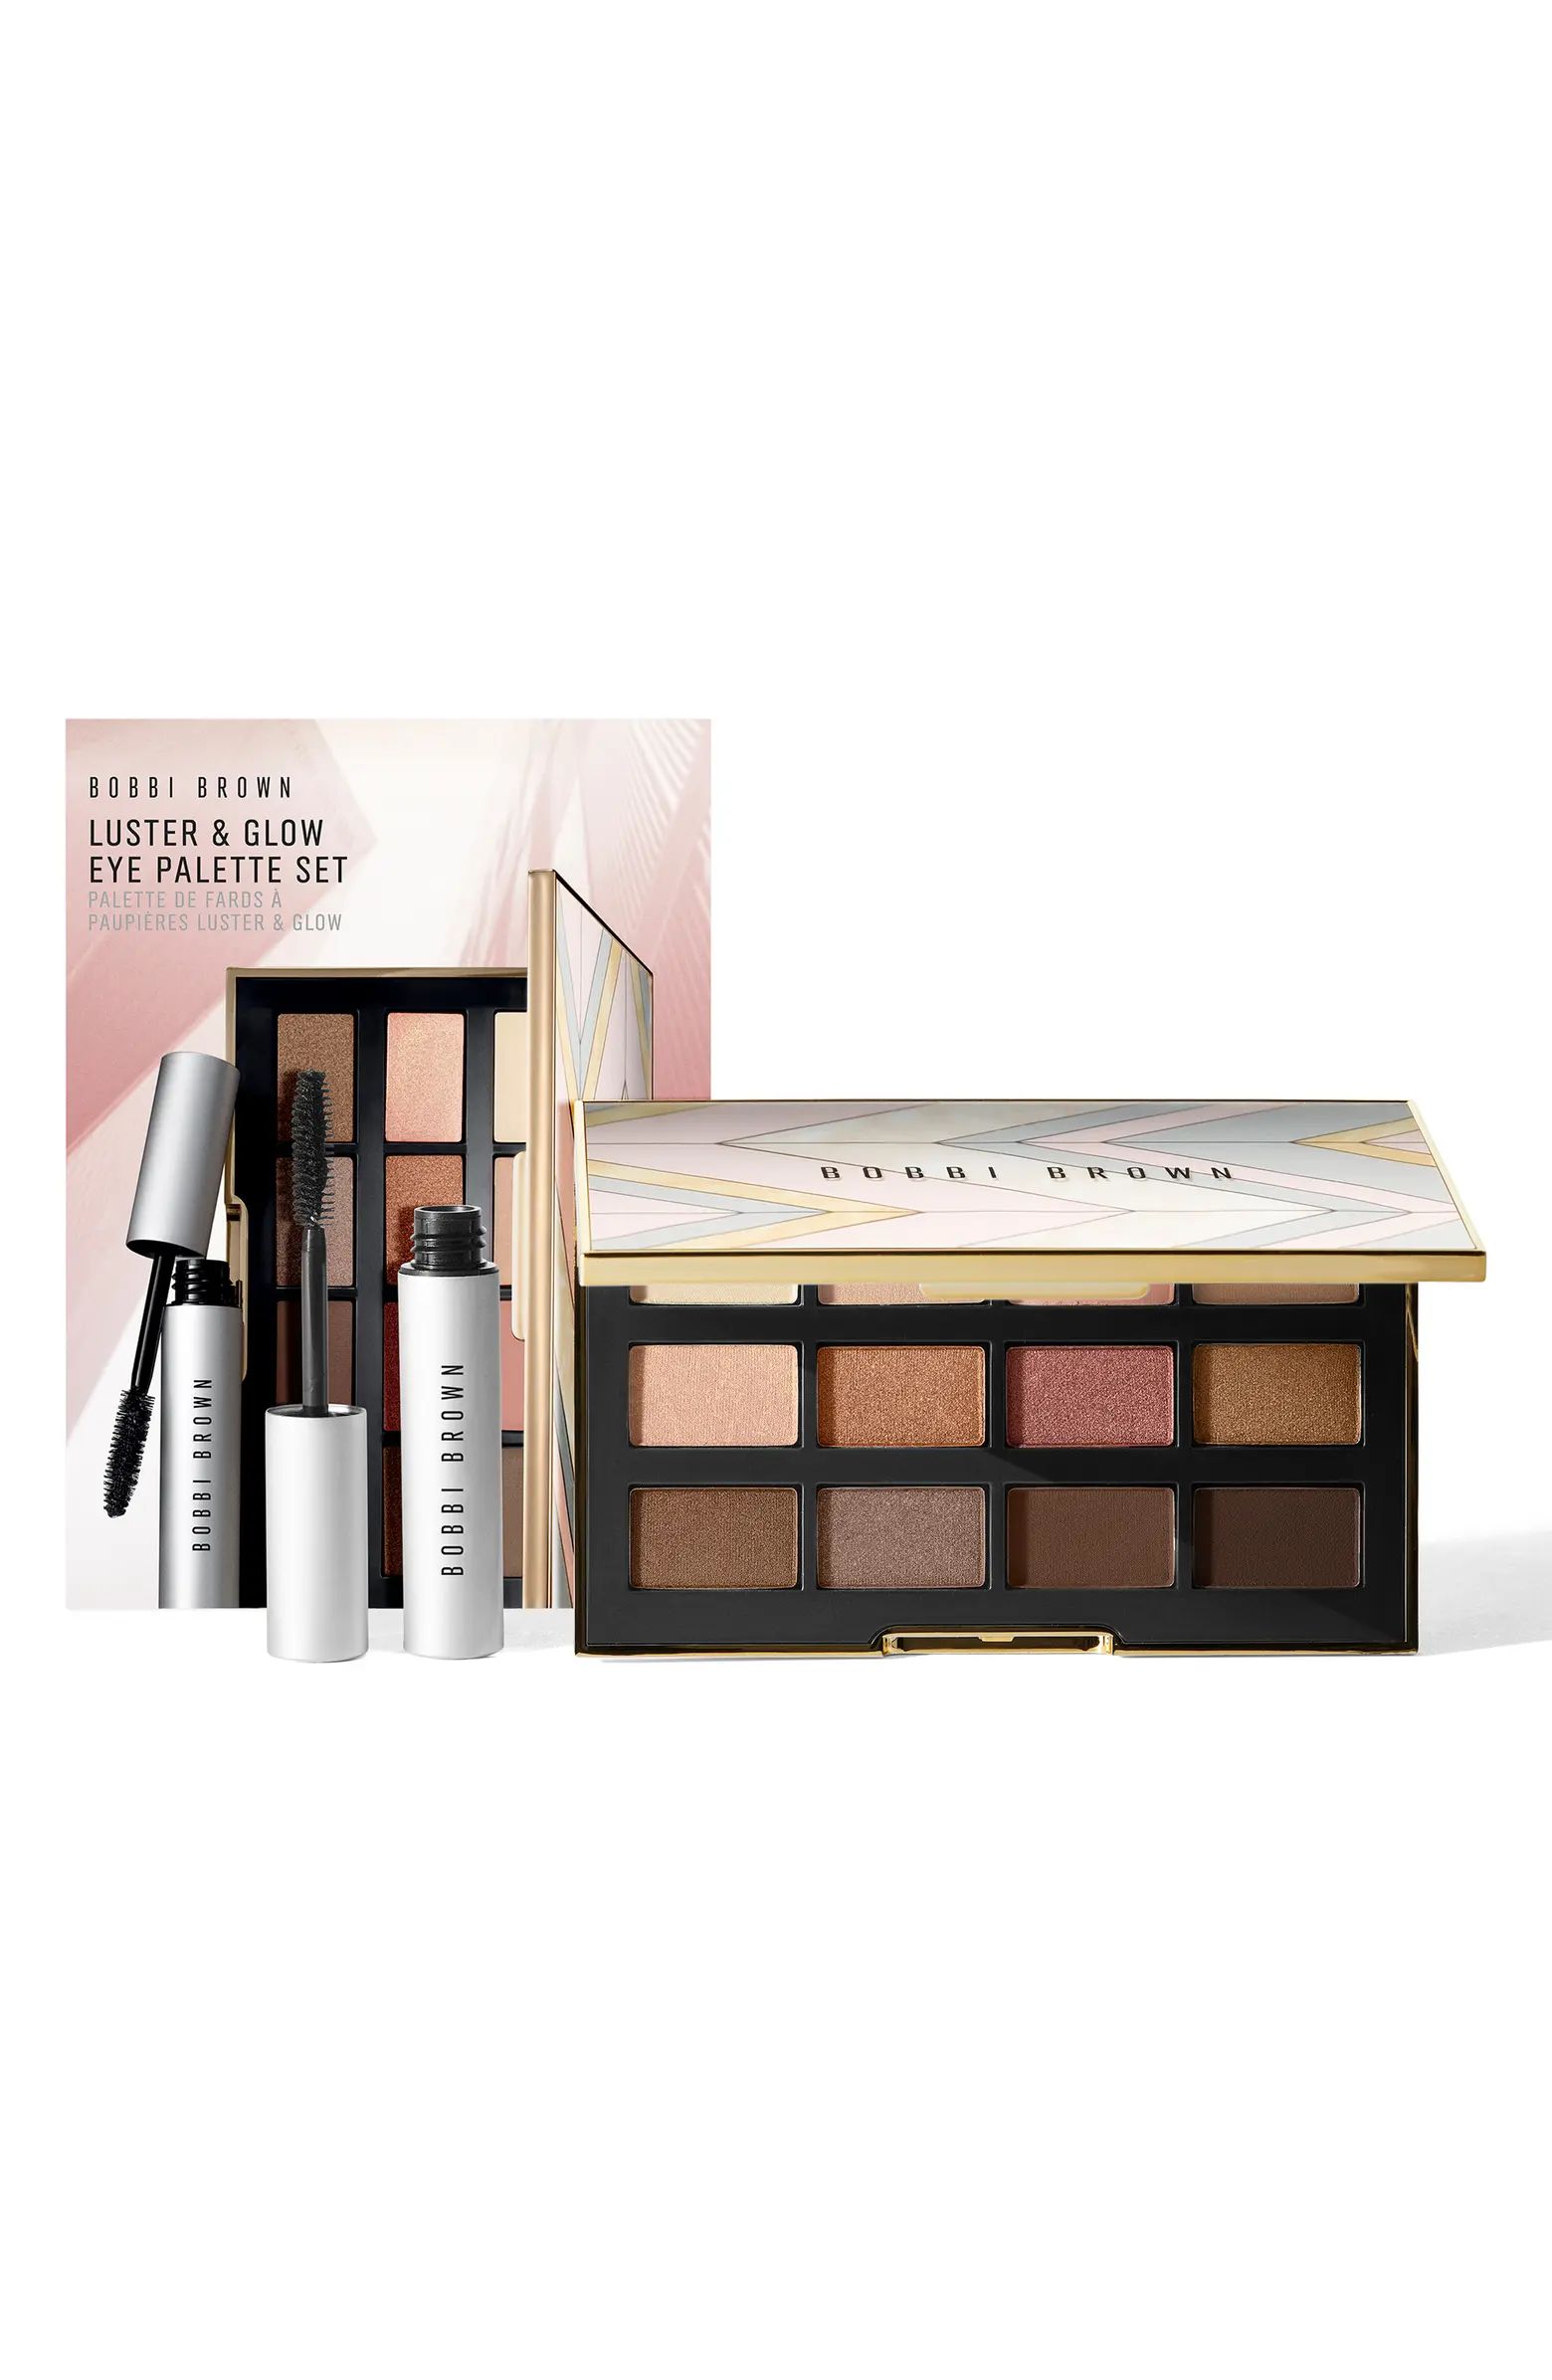 Bobbi Brown Luster & Glow Eyeshadow Palette & Mascara Set $170 Value | Nordstrom | Nordstrom